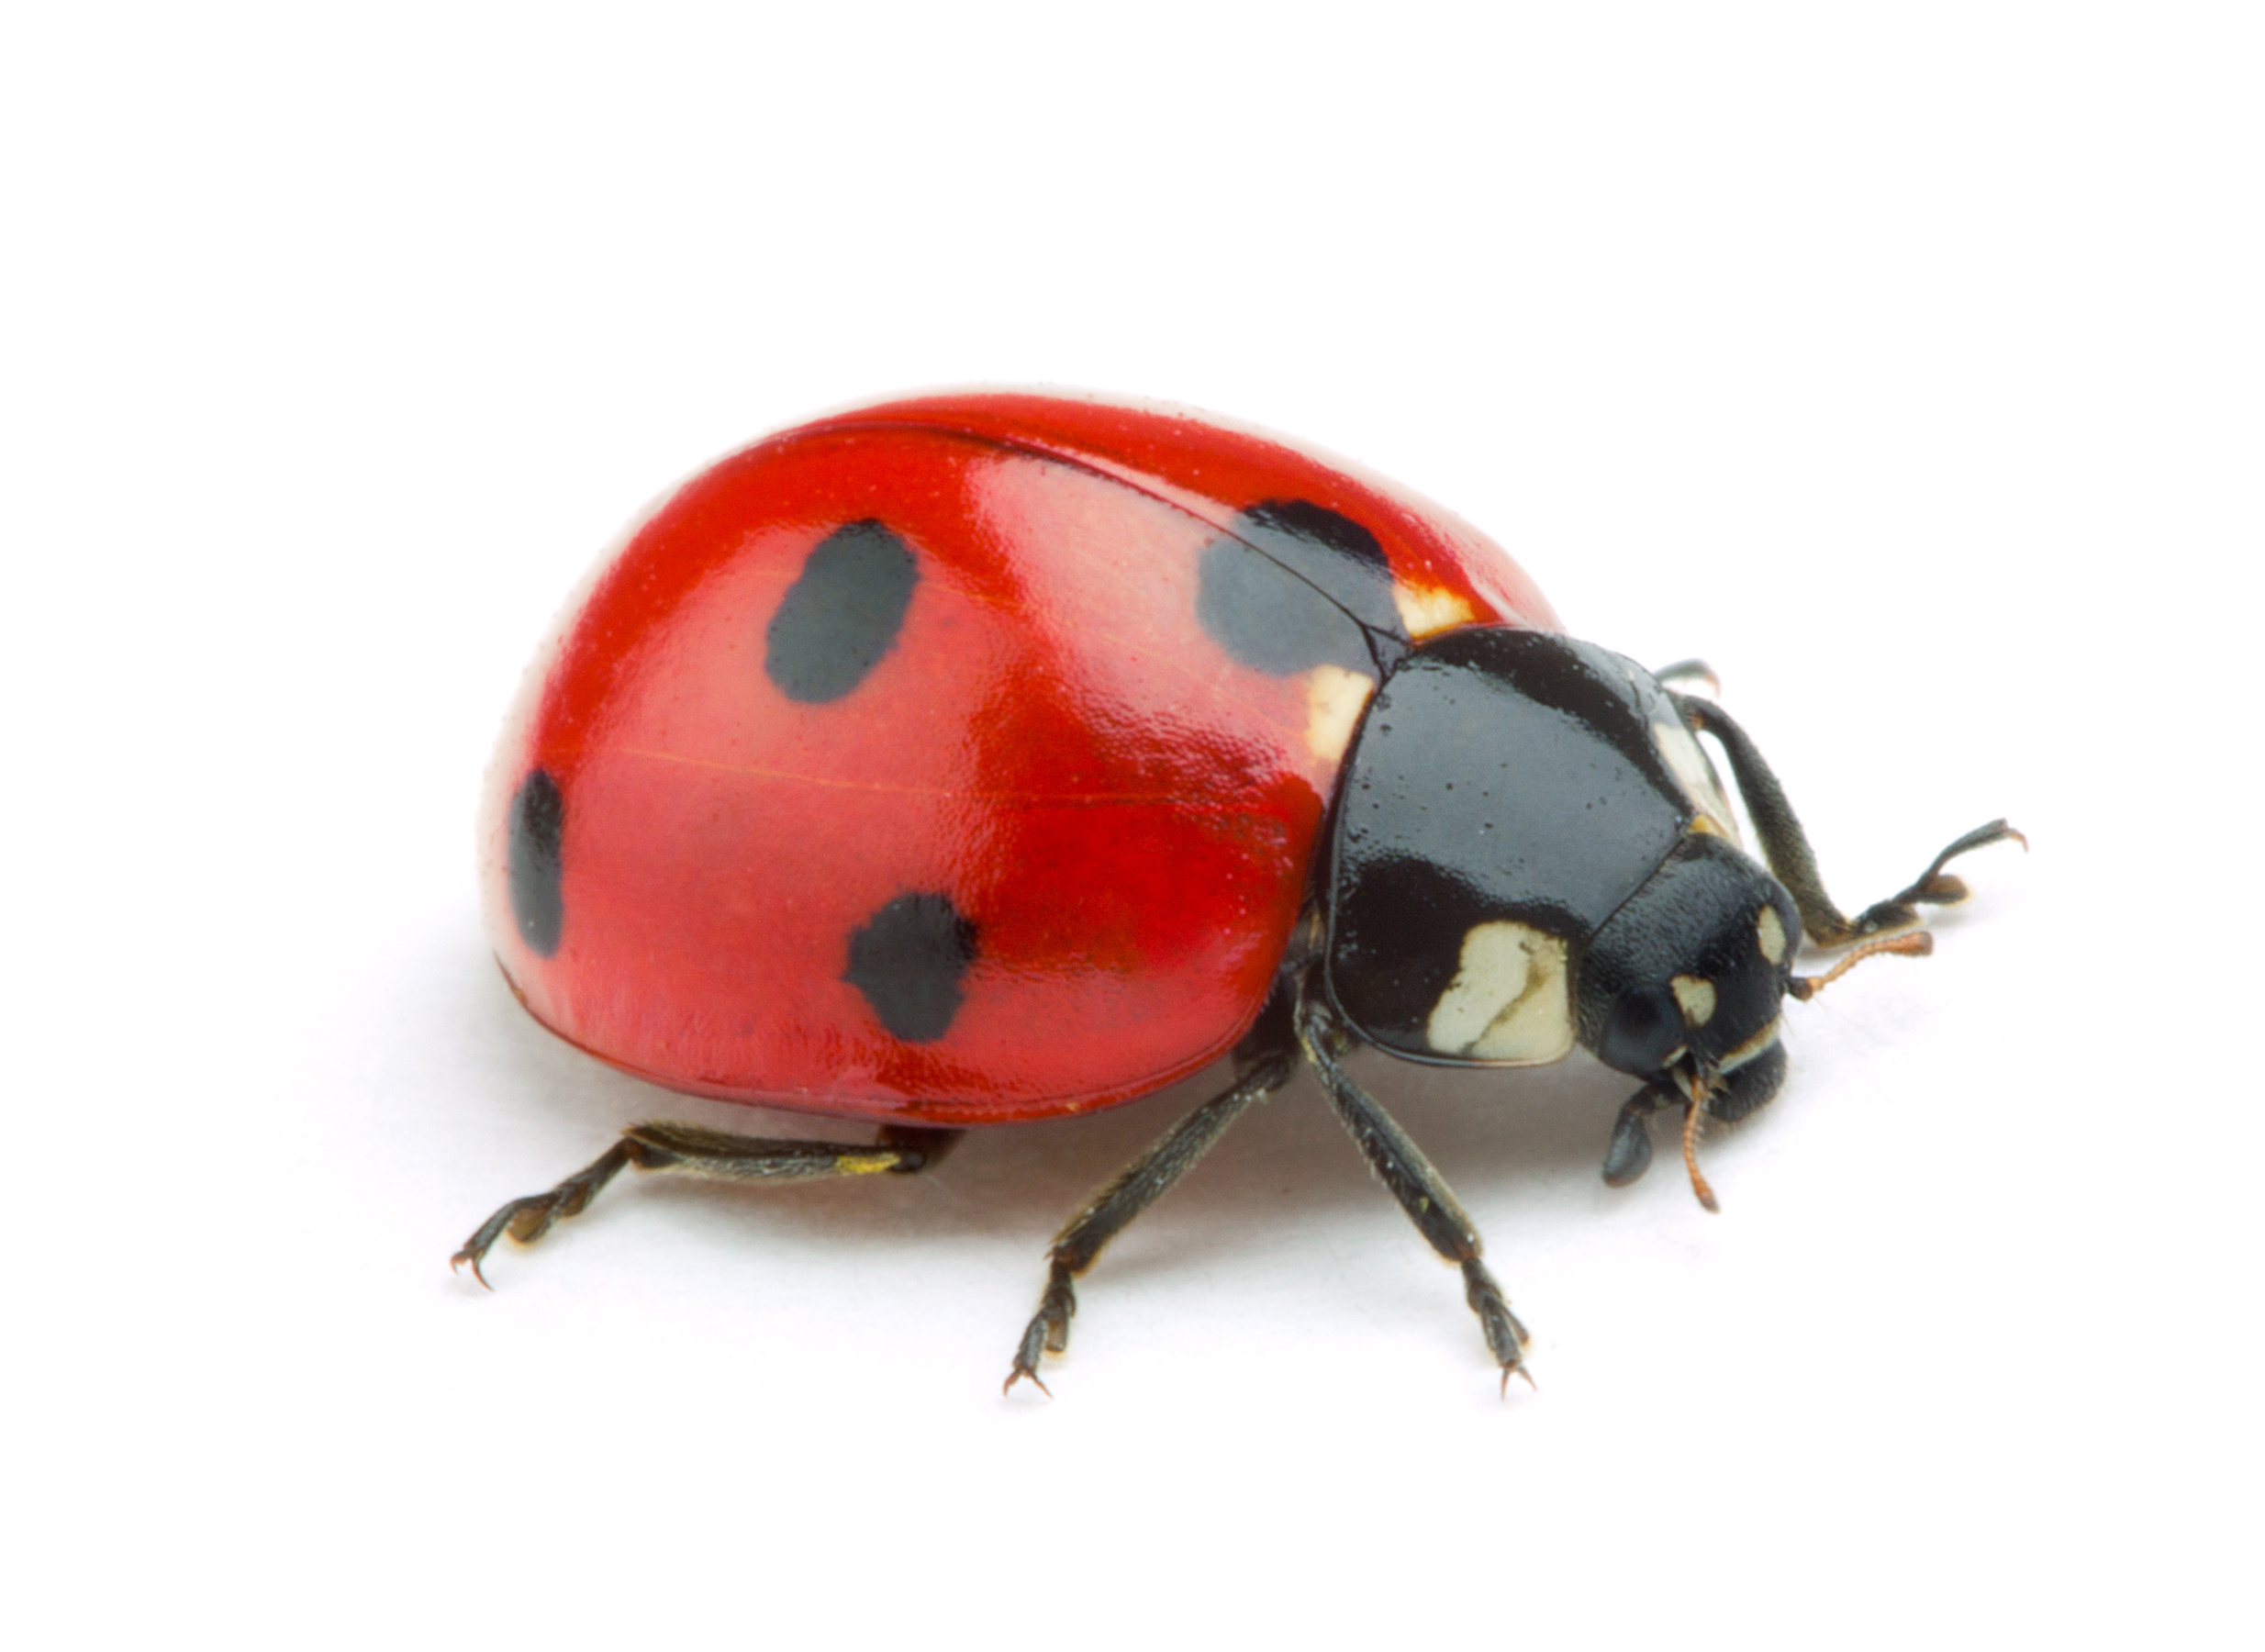 https://specializedpestandlawn.com/wp-content/uploads/2022/05/ladybug-1.jpg